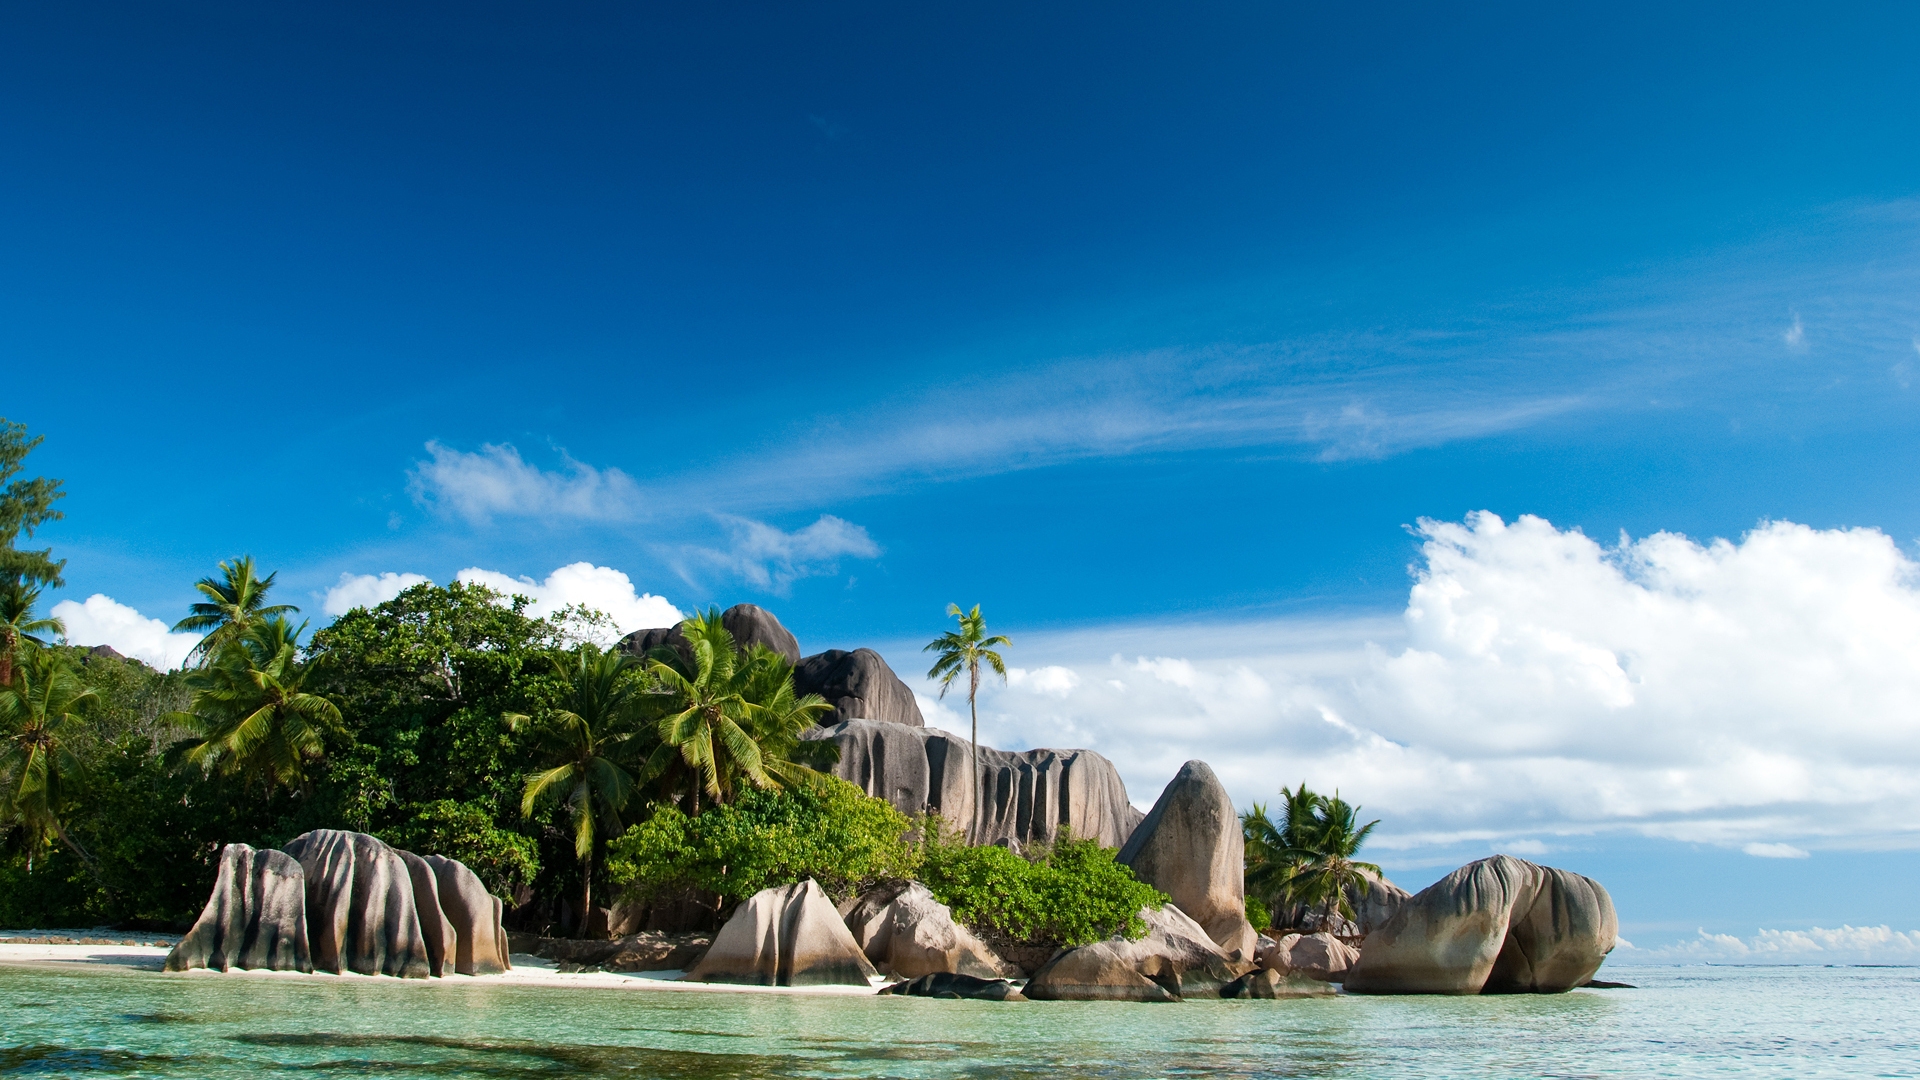 Seychelles Islands Landscape for 1920 x 1080 HDTV 1080p resolution